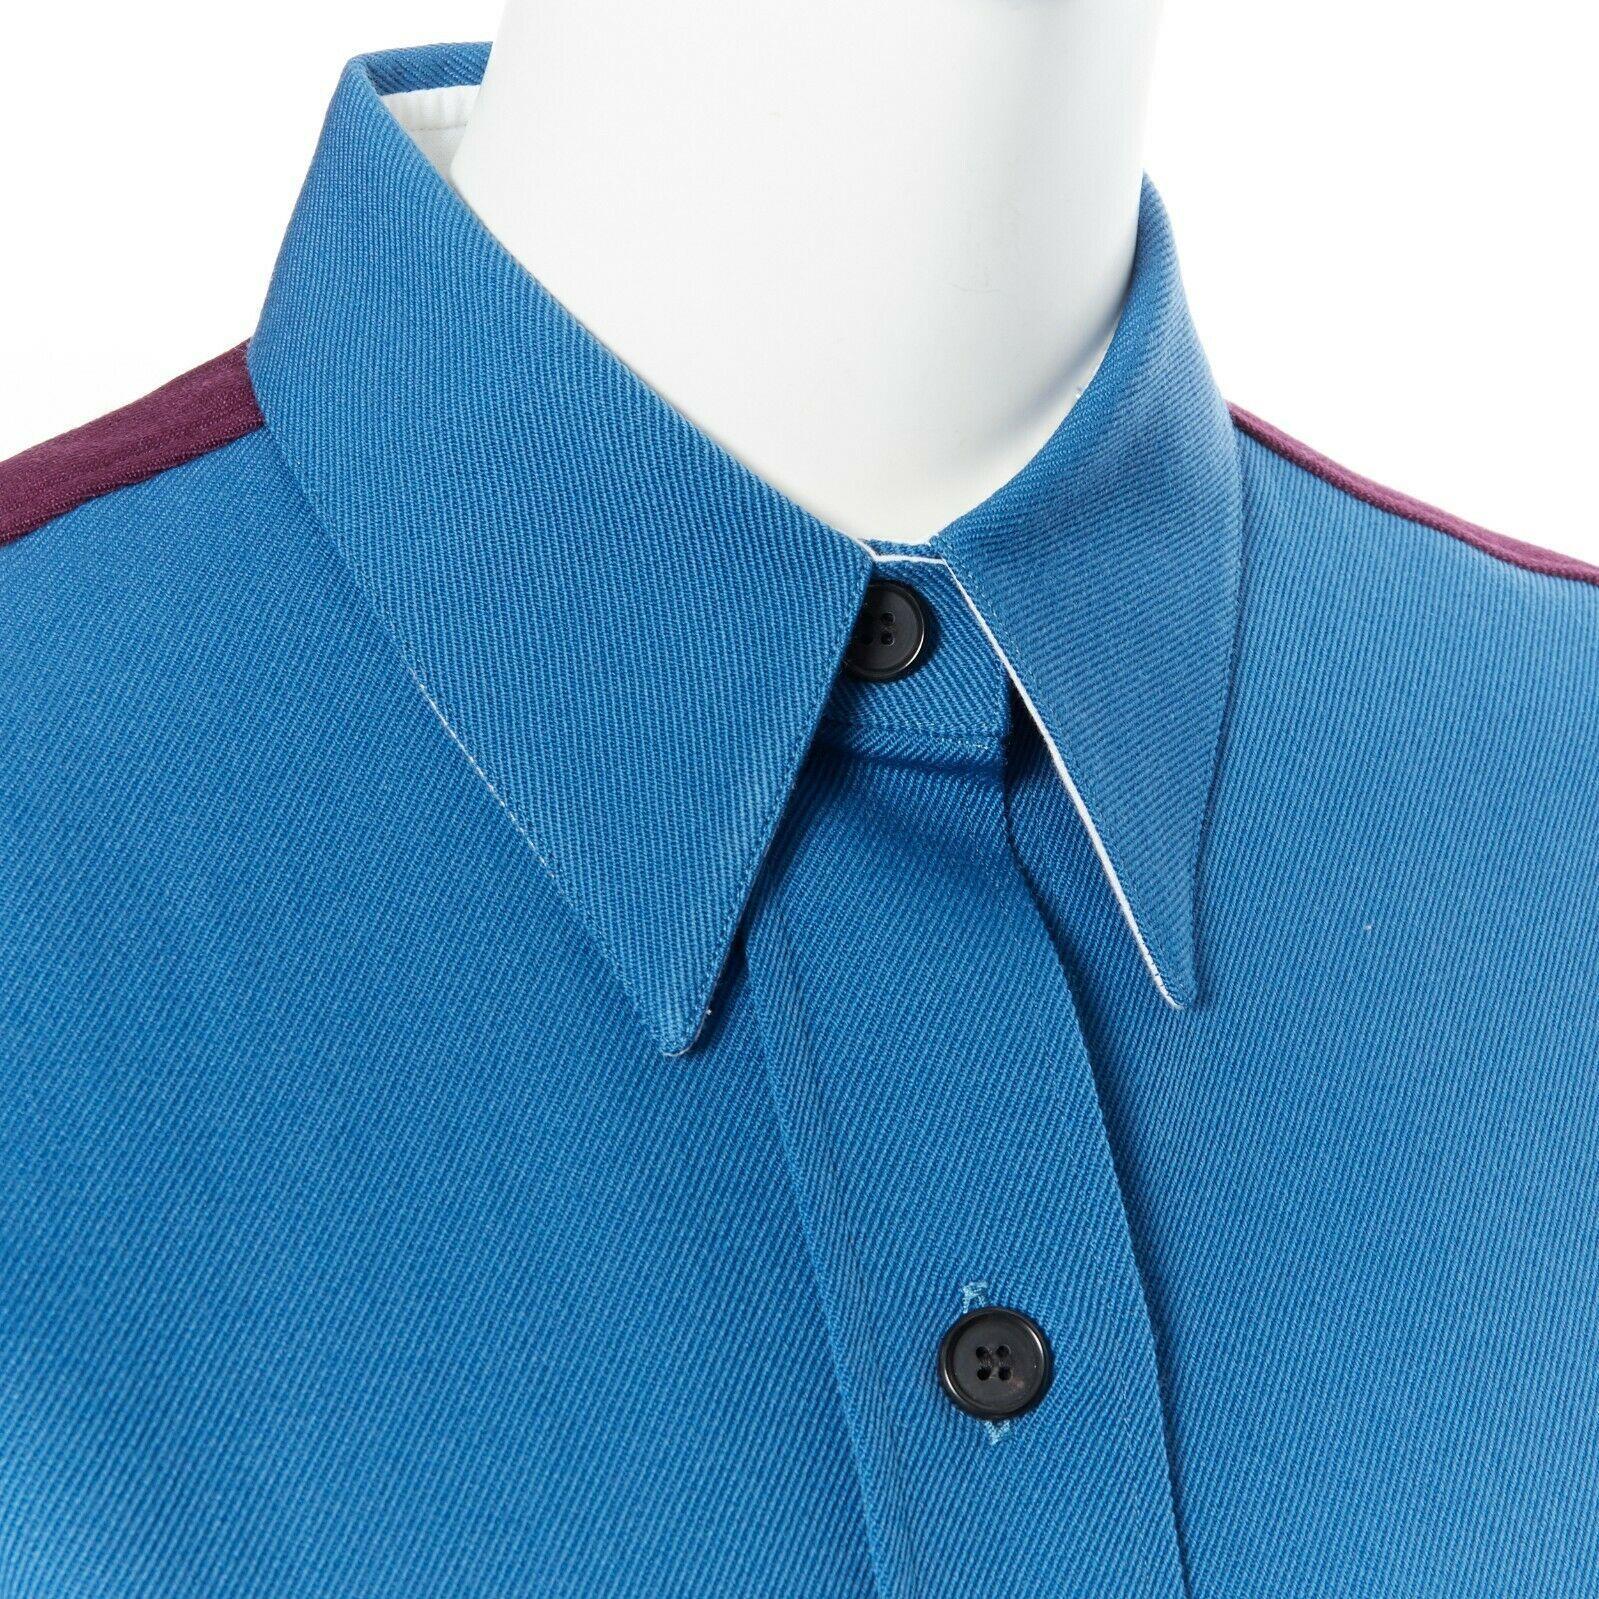 runway CALVIN KLEIN RAF SIMONS AW17 blue purple wool diner uniform shirt IT38 XS
Designer: CALVIN KLEIN205W39NYC BY RAF SIMONS
Model / Season: Fall / Winter 2017
Material: wool
Color: blue, purple
Pattern: plain
Description: Diner uniform shirt.